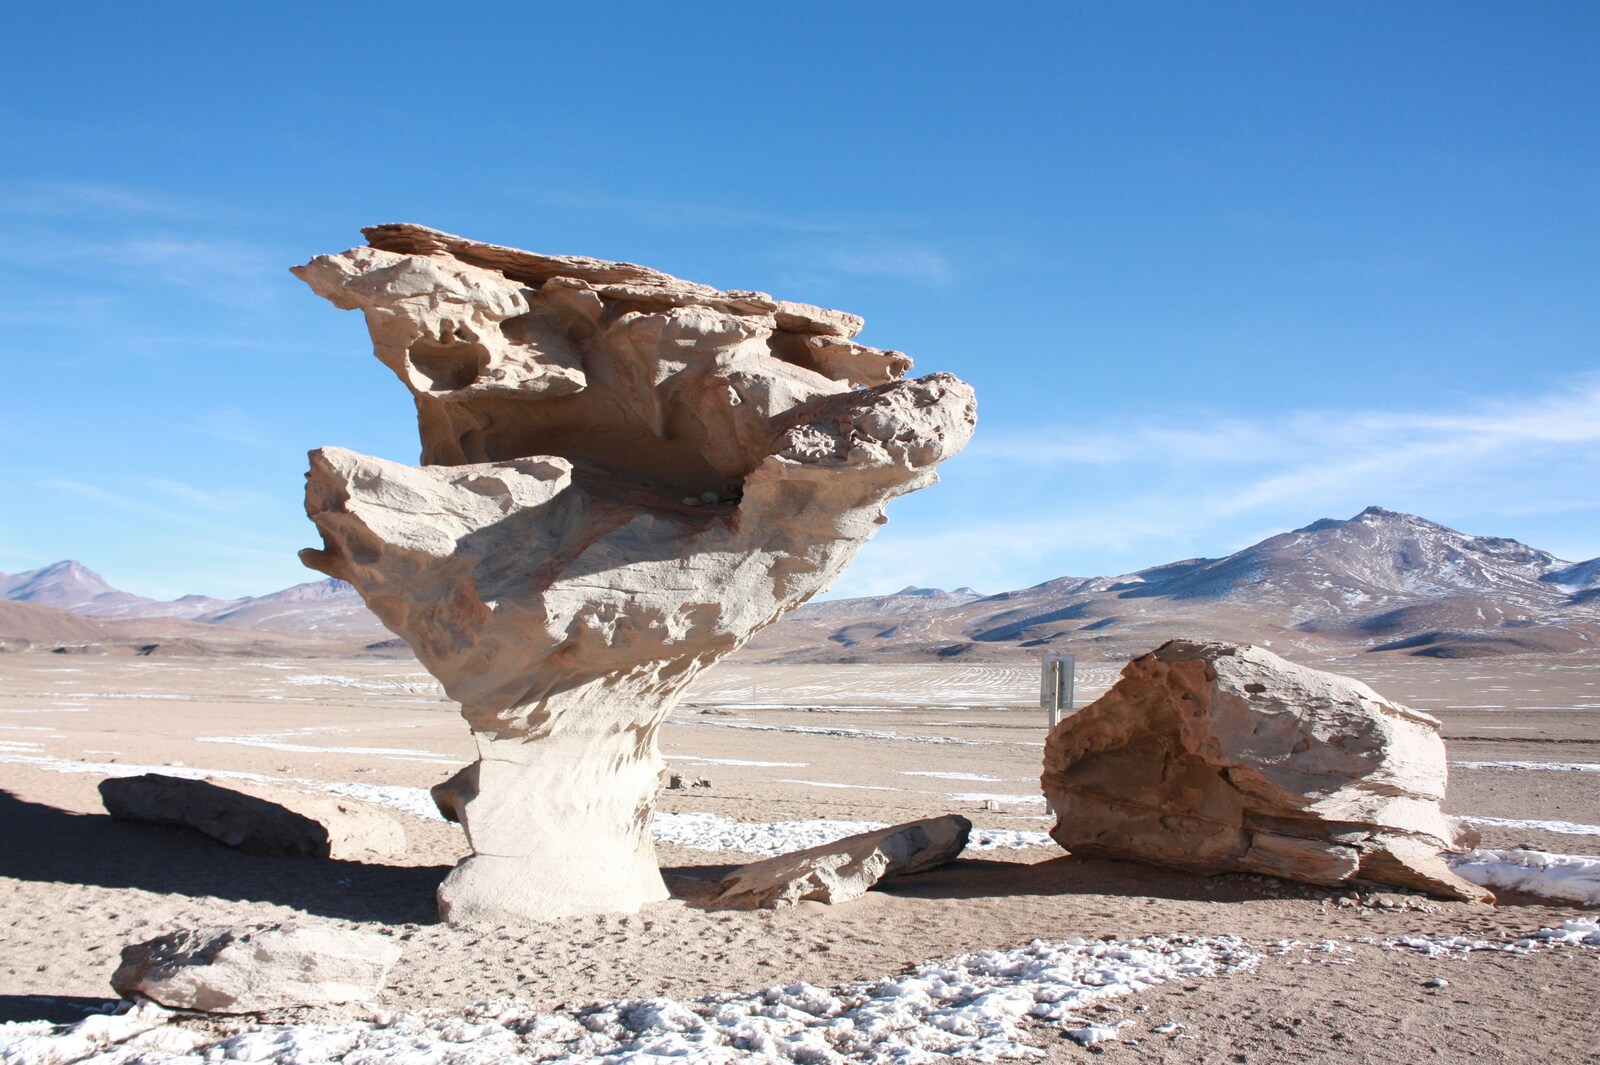 Image of Stone Tree, Siloli desert by Team PhotoHound